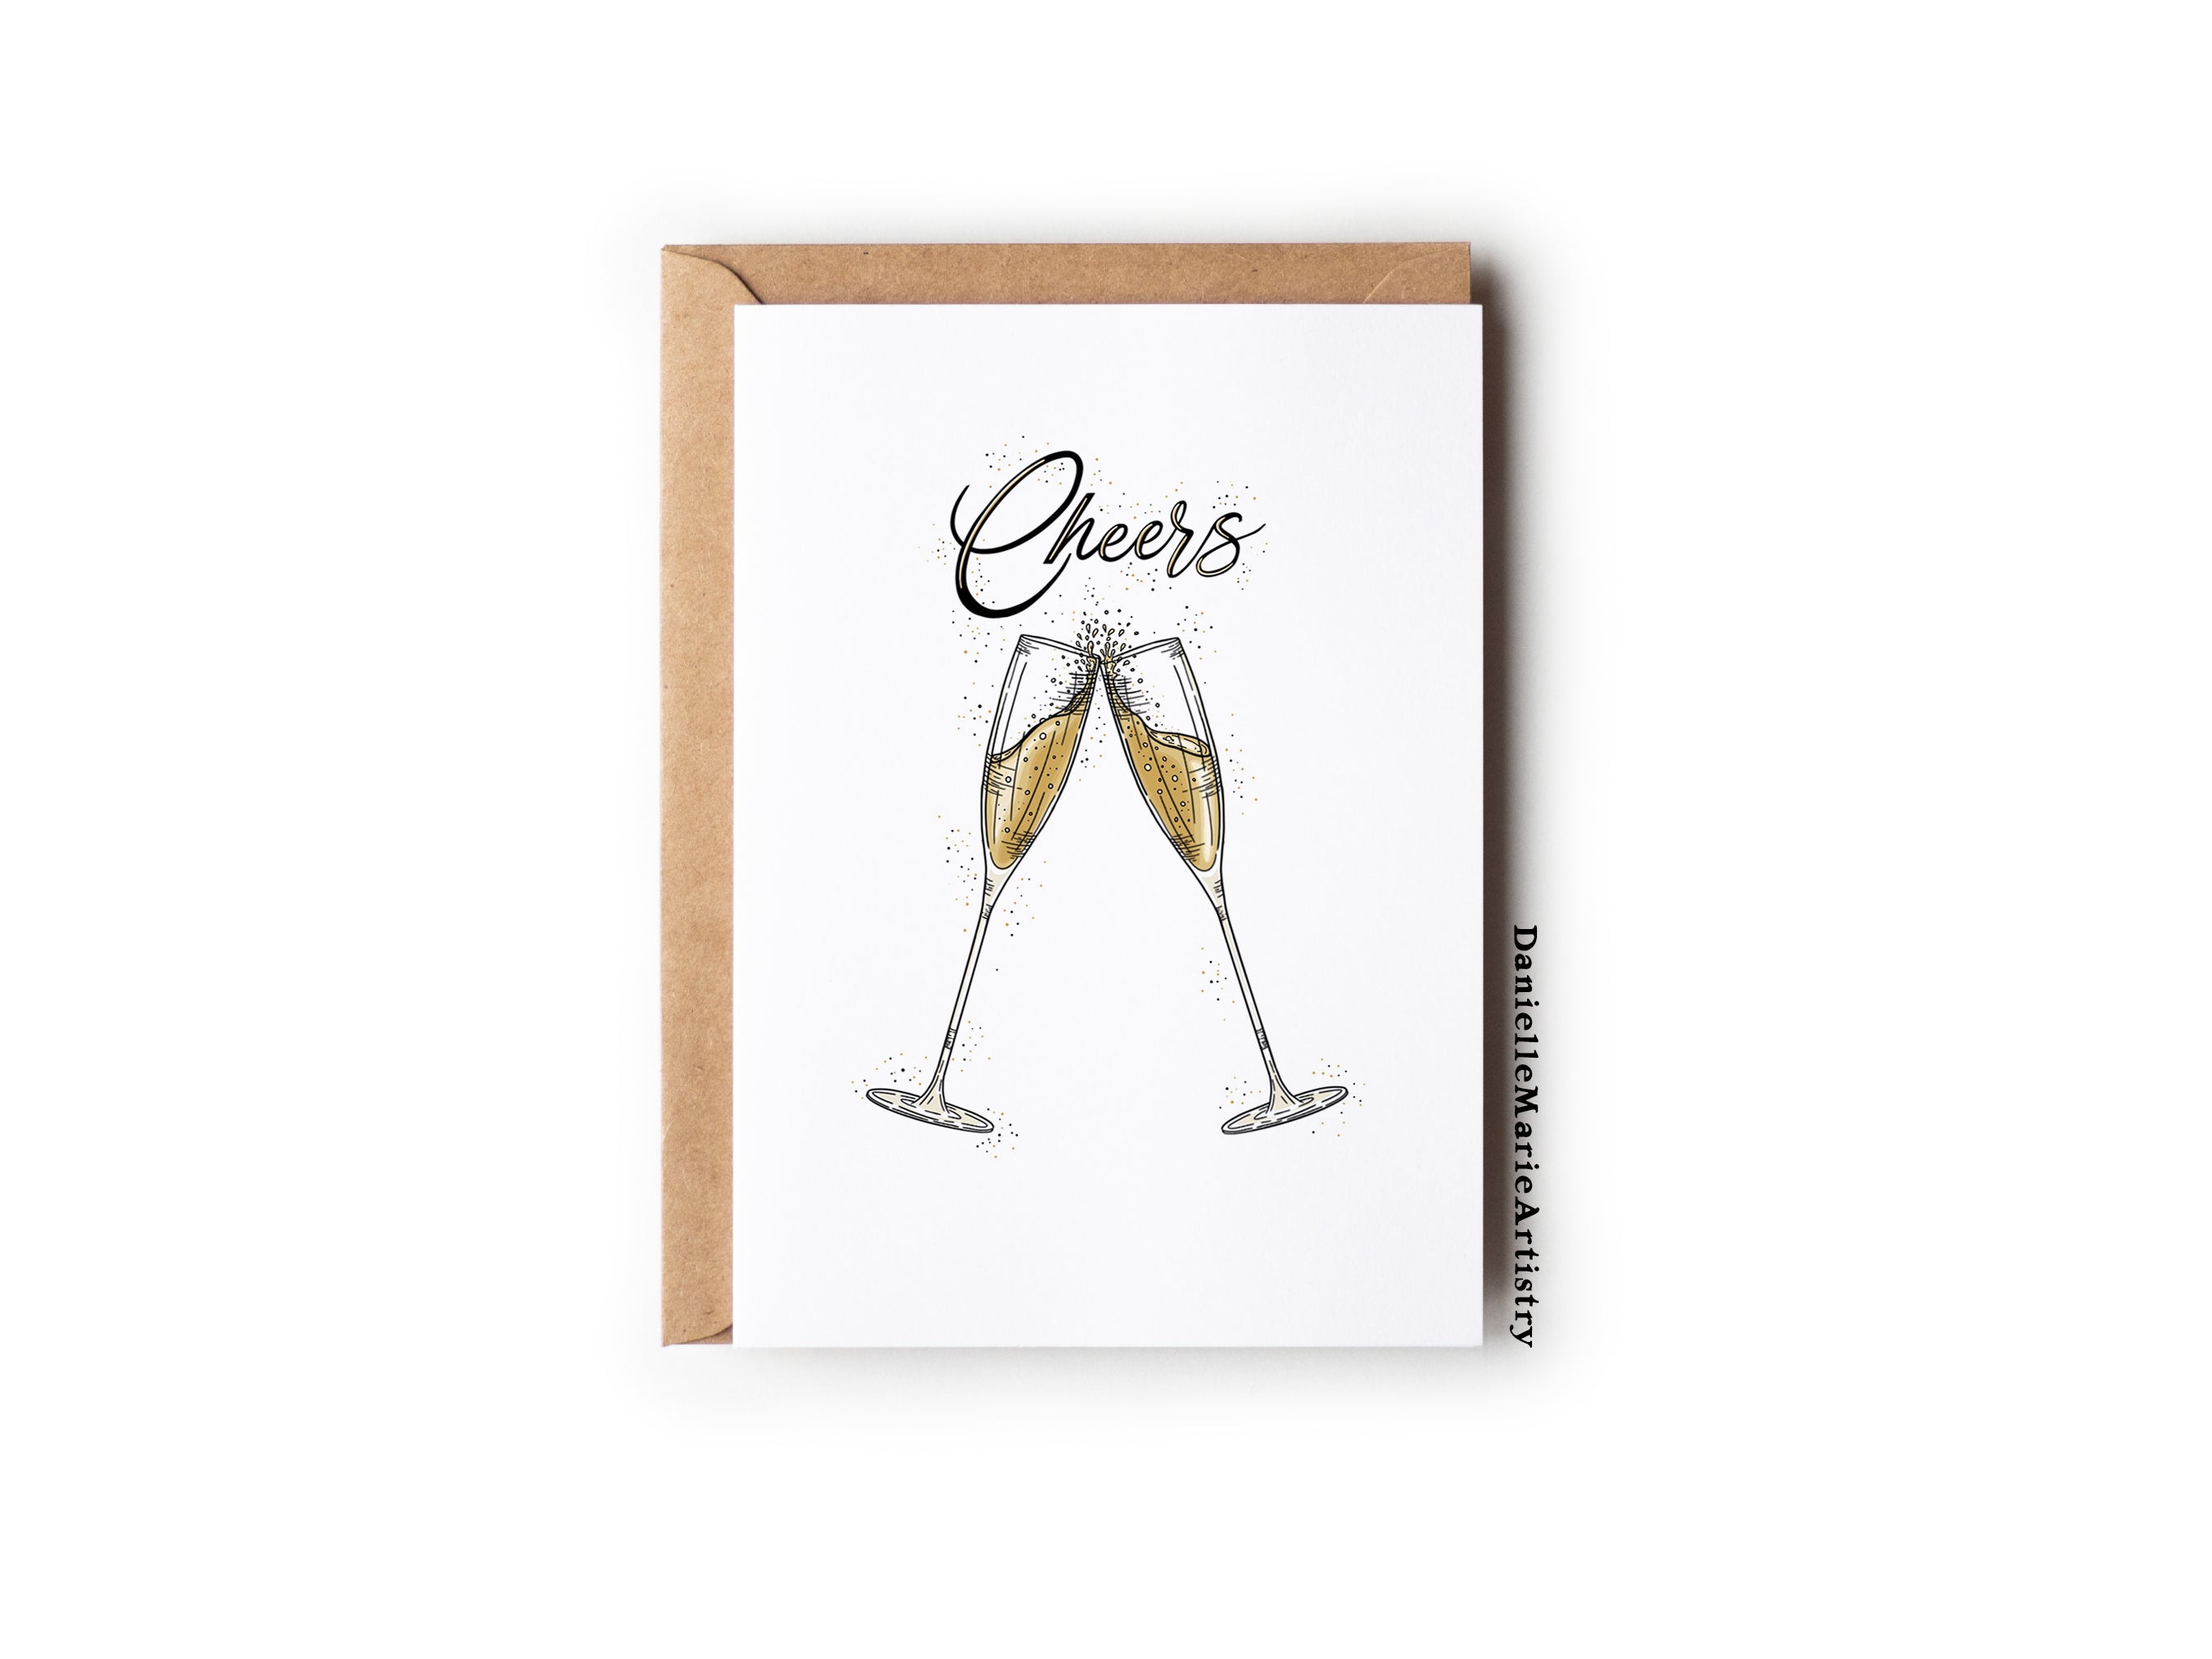 Cheers - Greeting Card